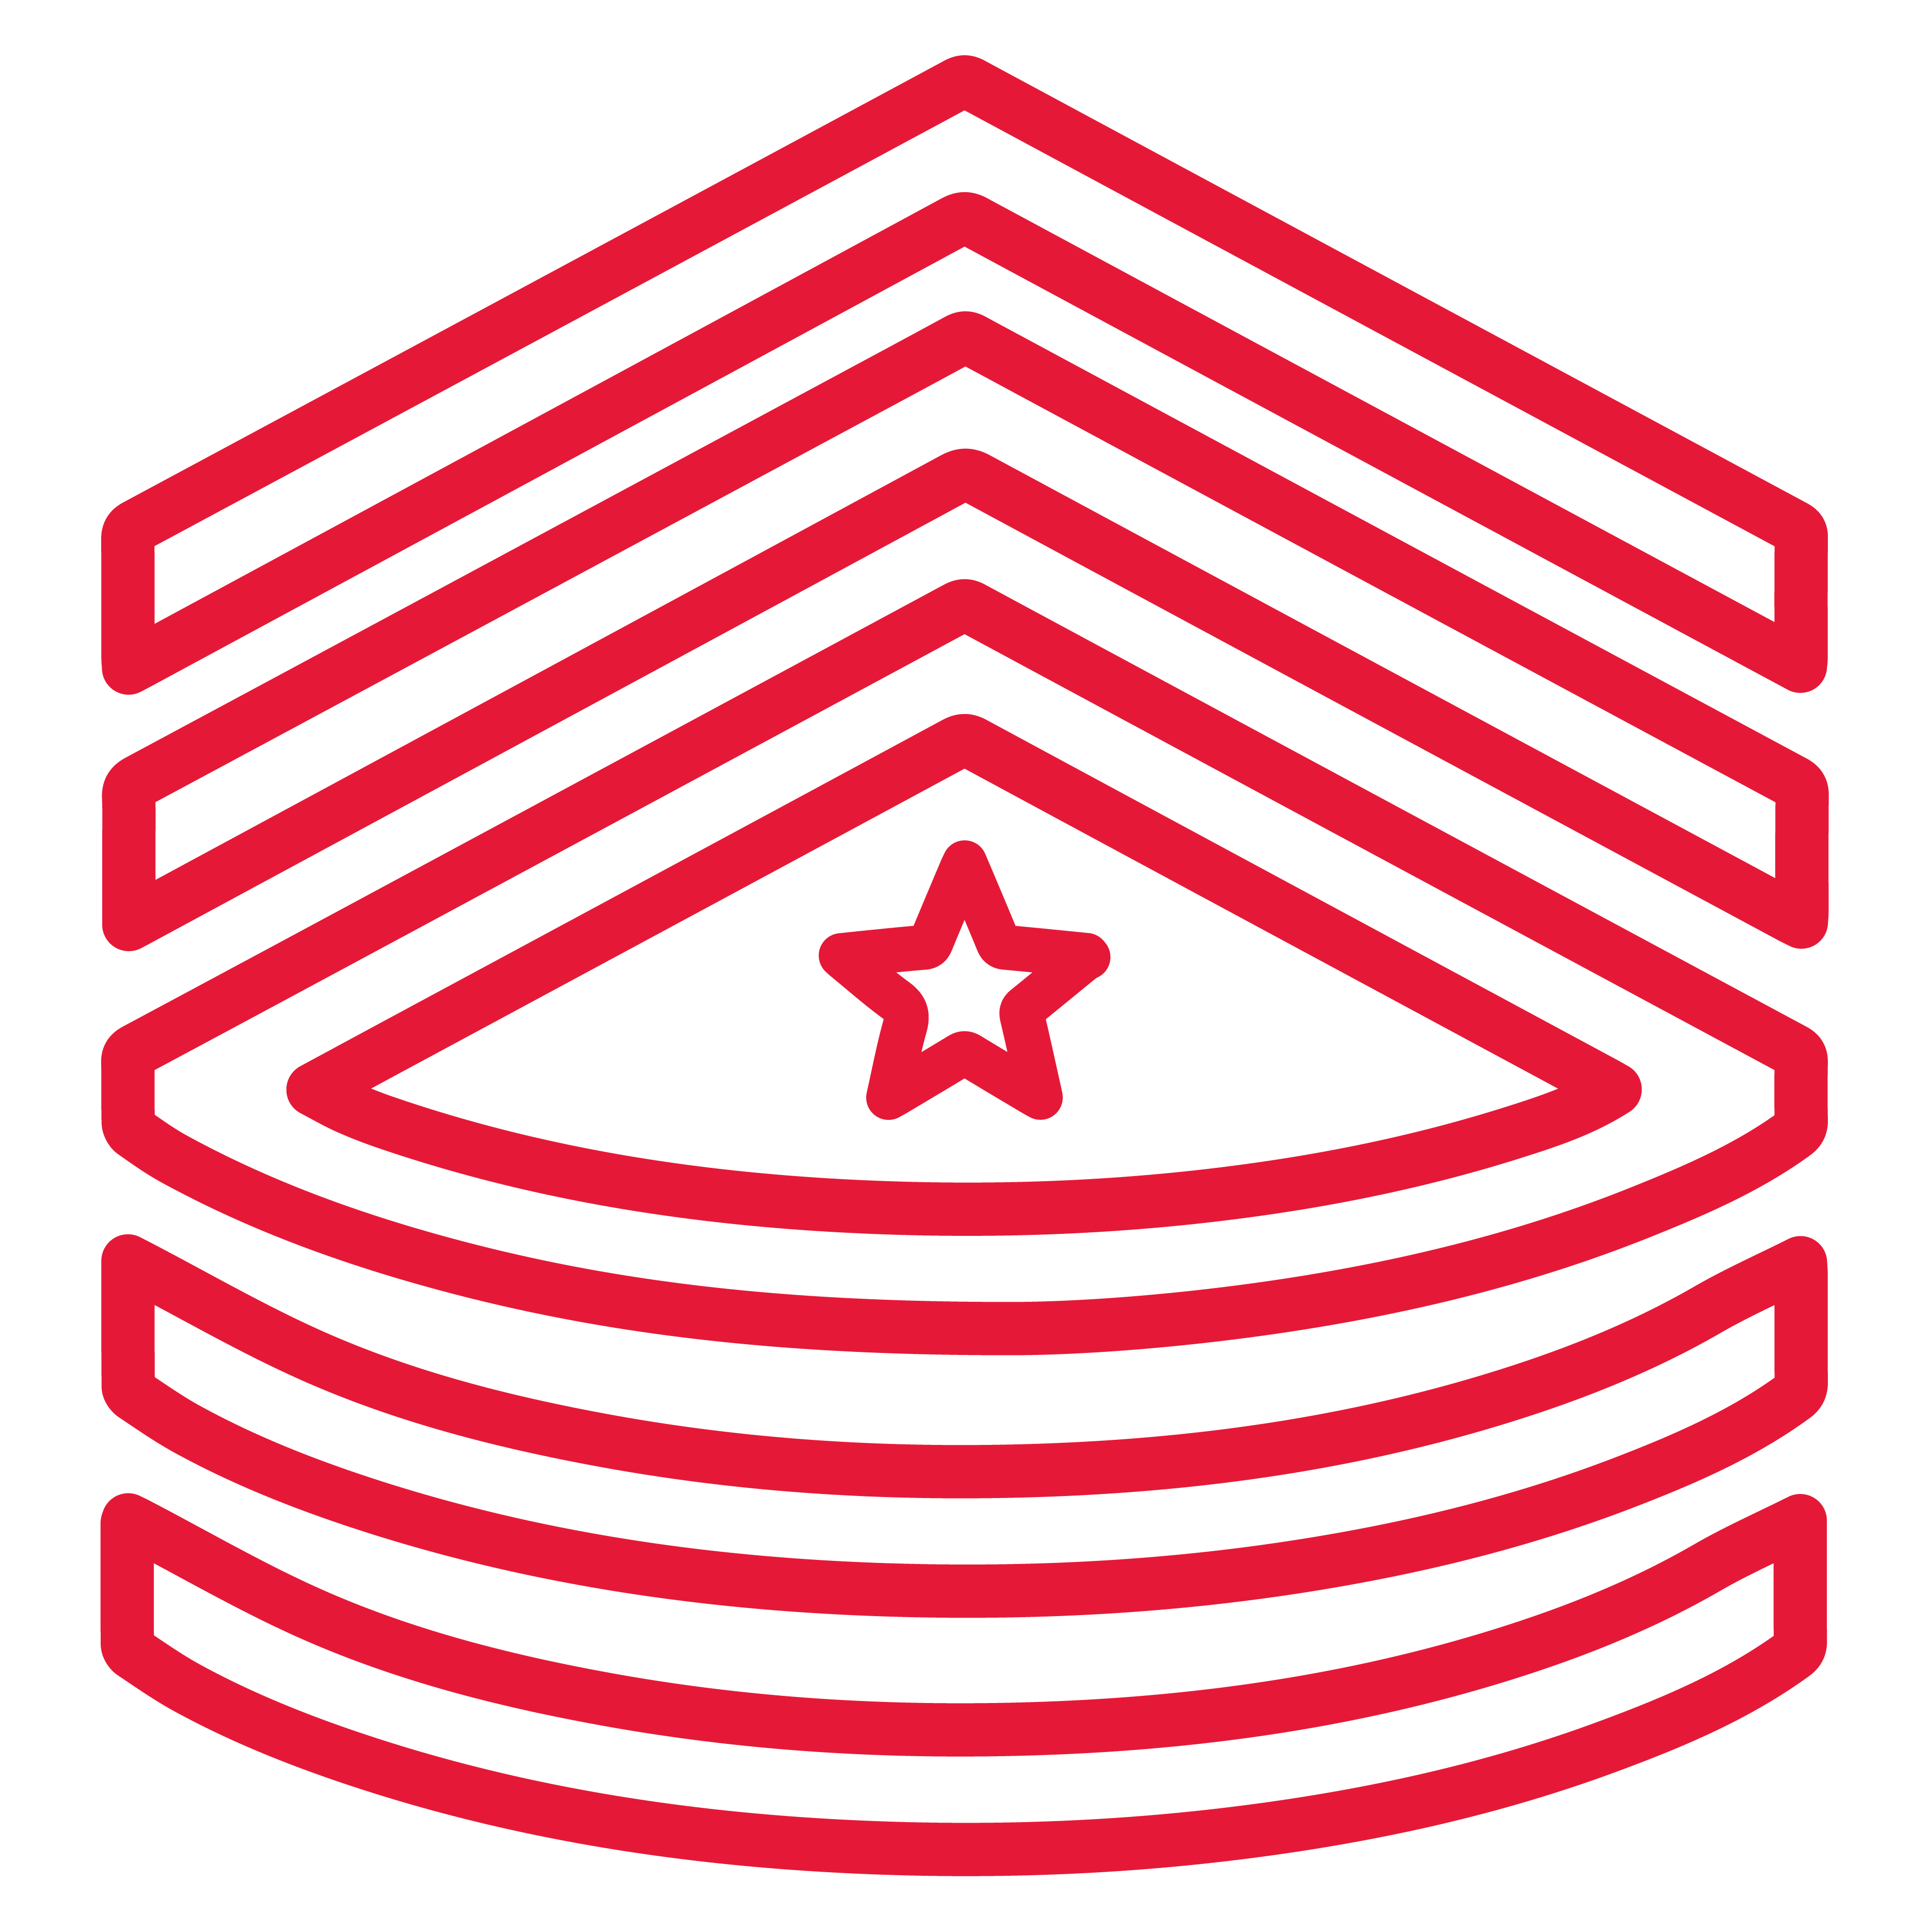 US Army Sergeant Major insignia